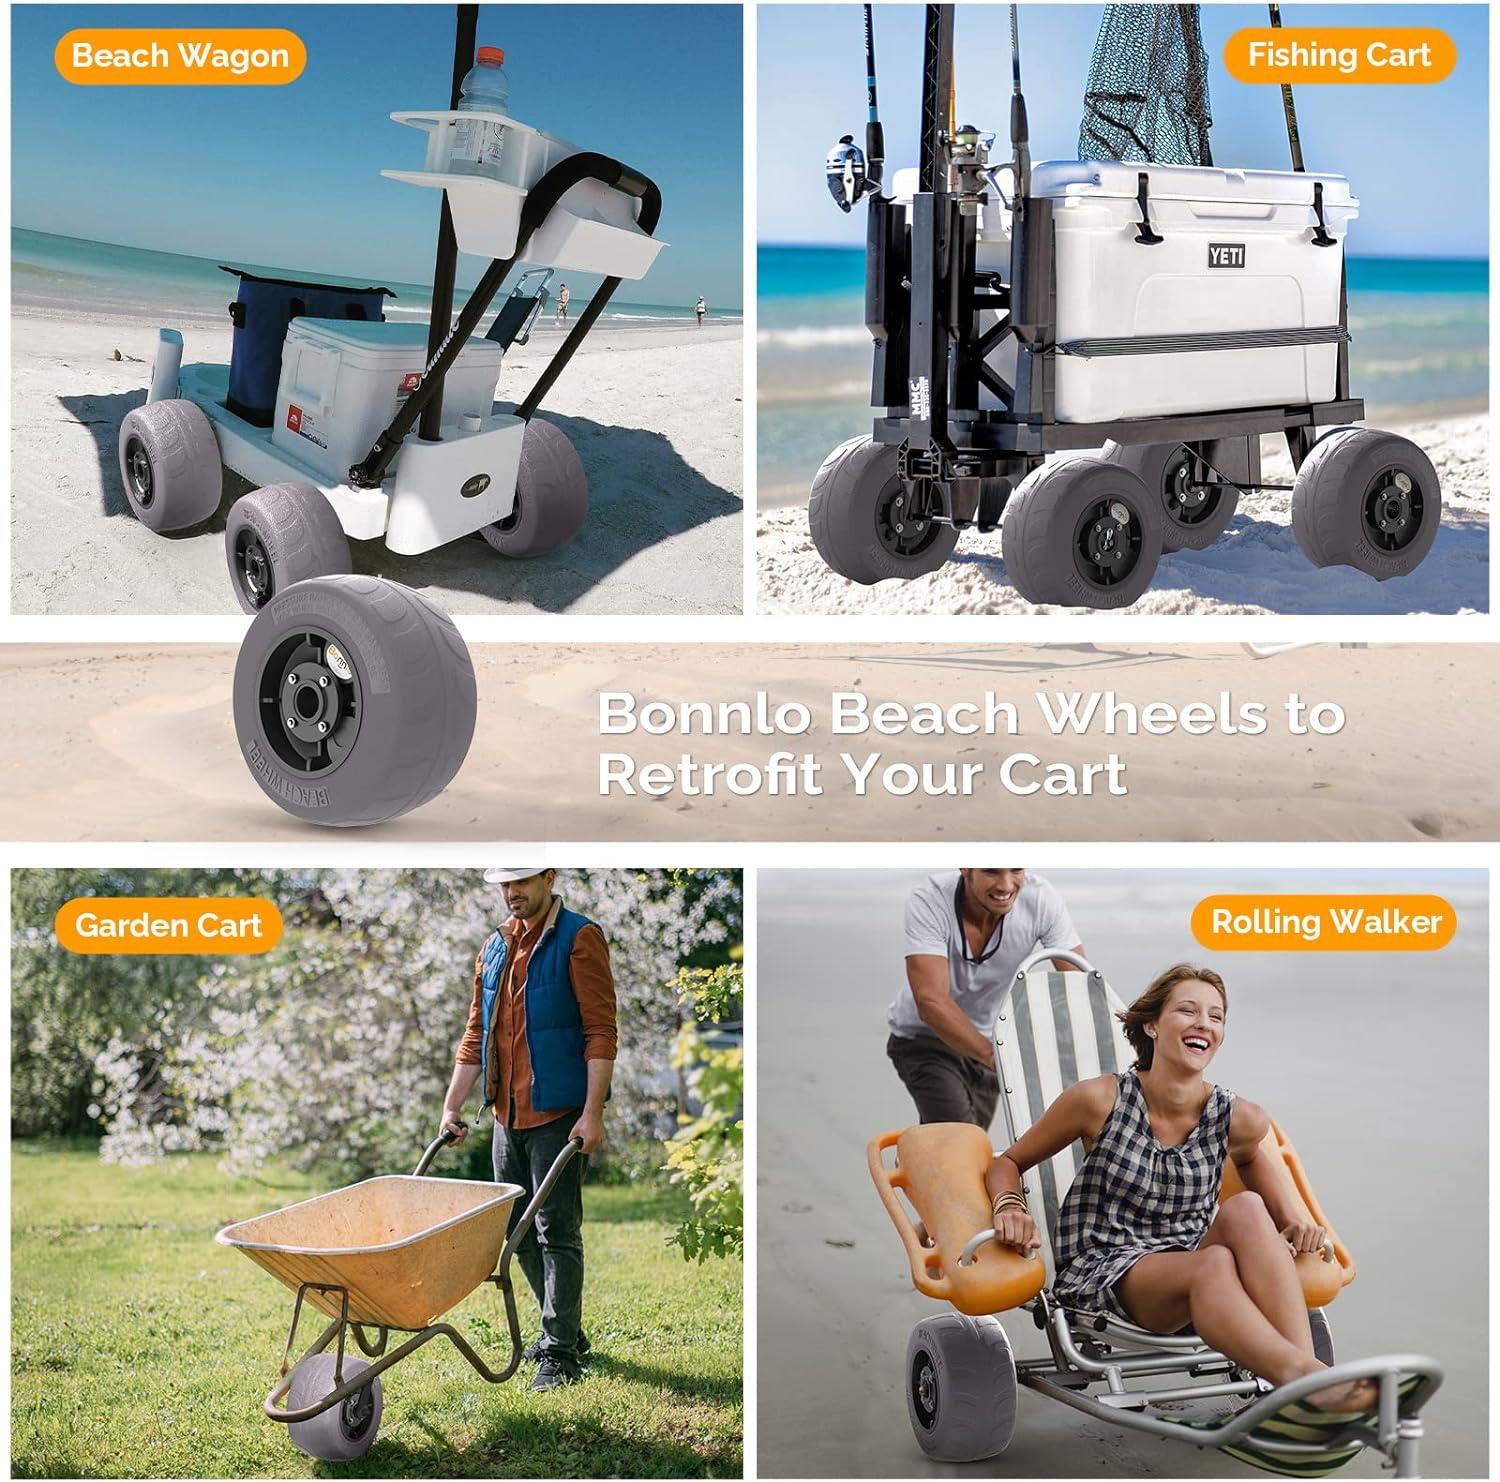 Beach Cart Wheels? : r/SurfFishing